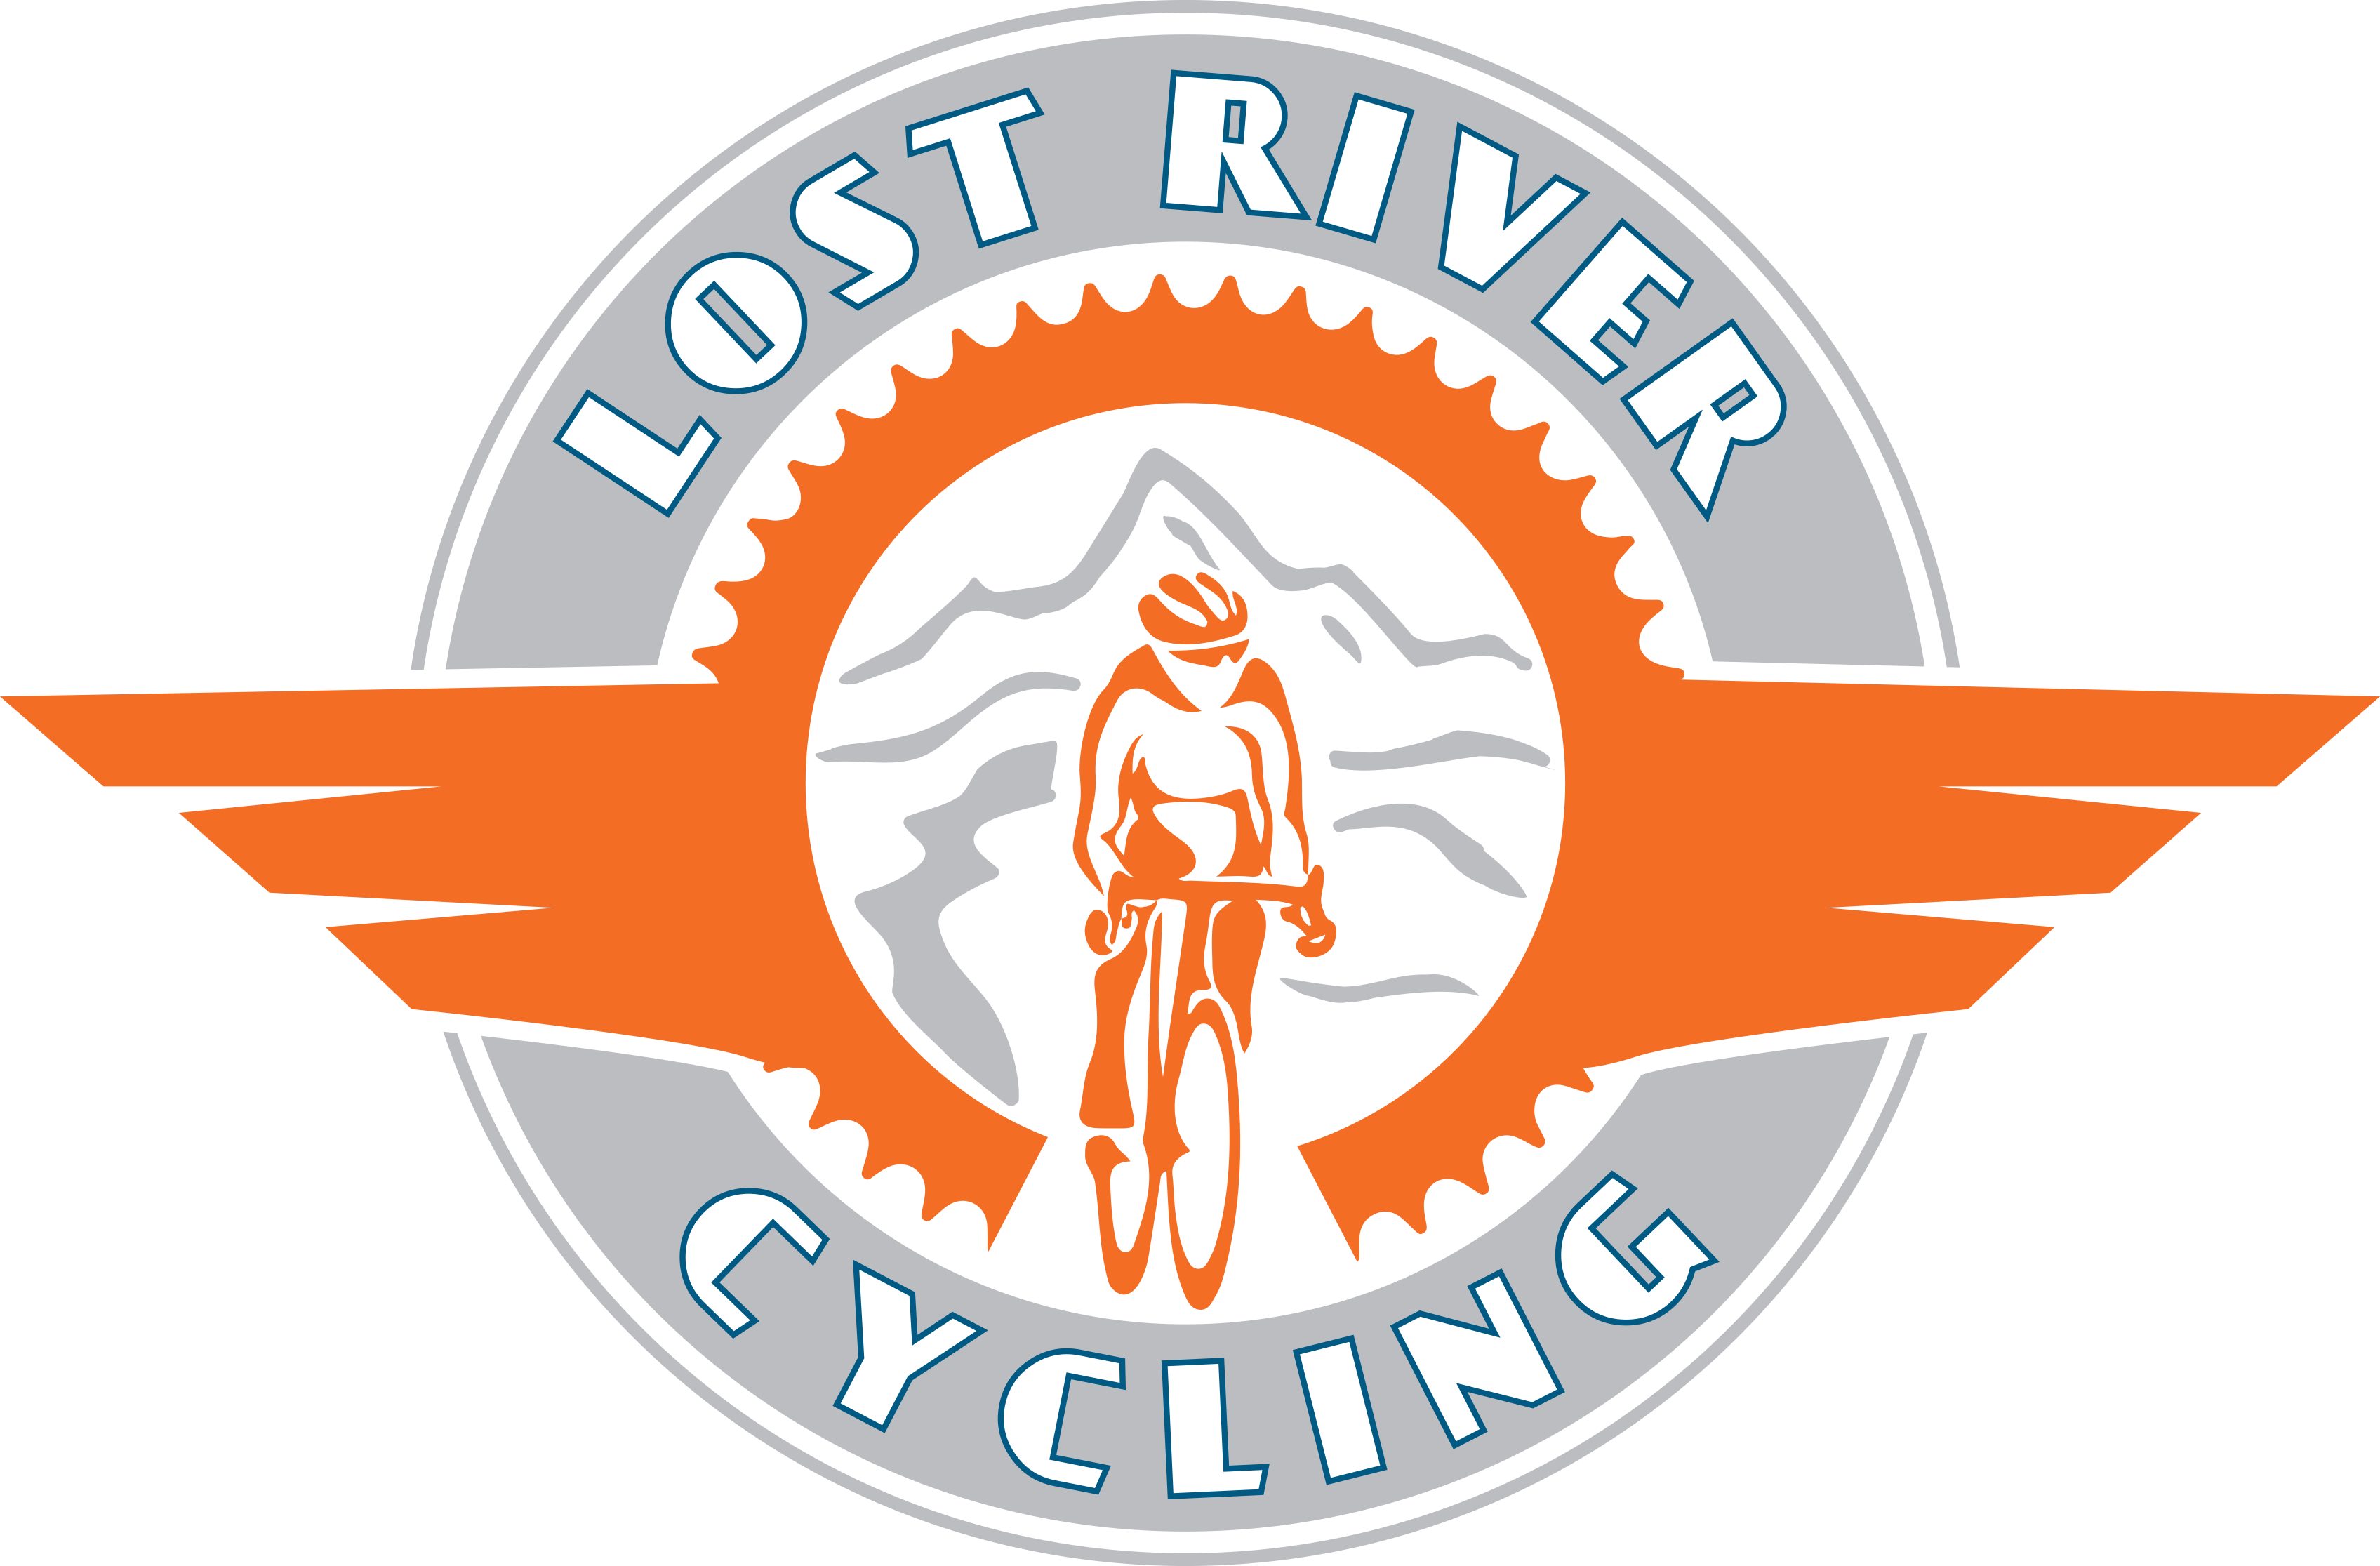 Lost River Cycling logo